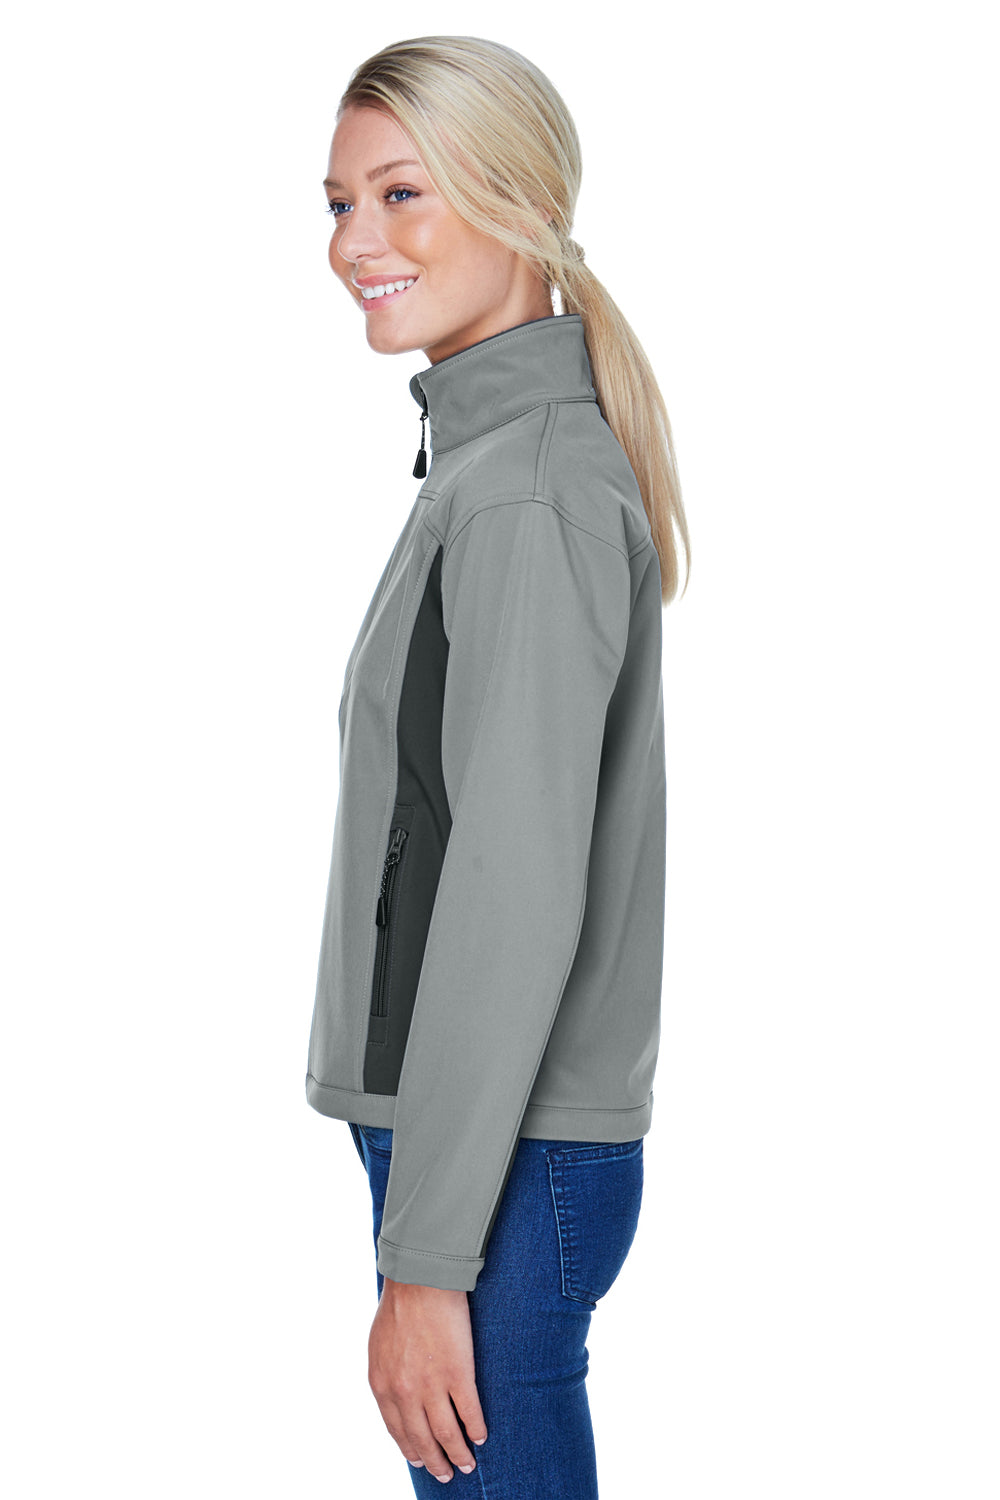 Devon & Jones D997W Womens Wind & Water Resistant Full Zip Jacket Charcoal Grey/Dark Grey Side